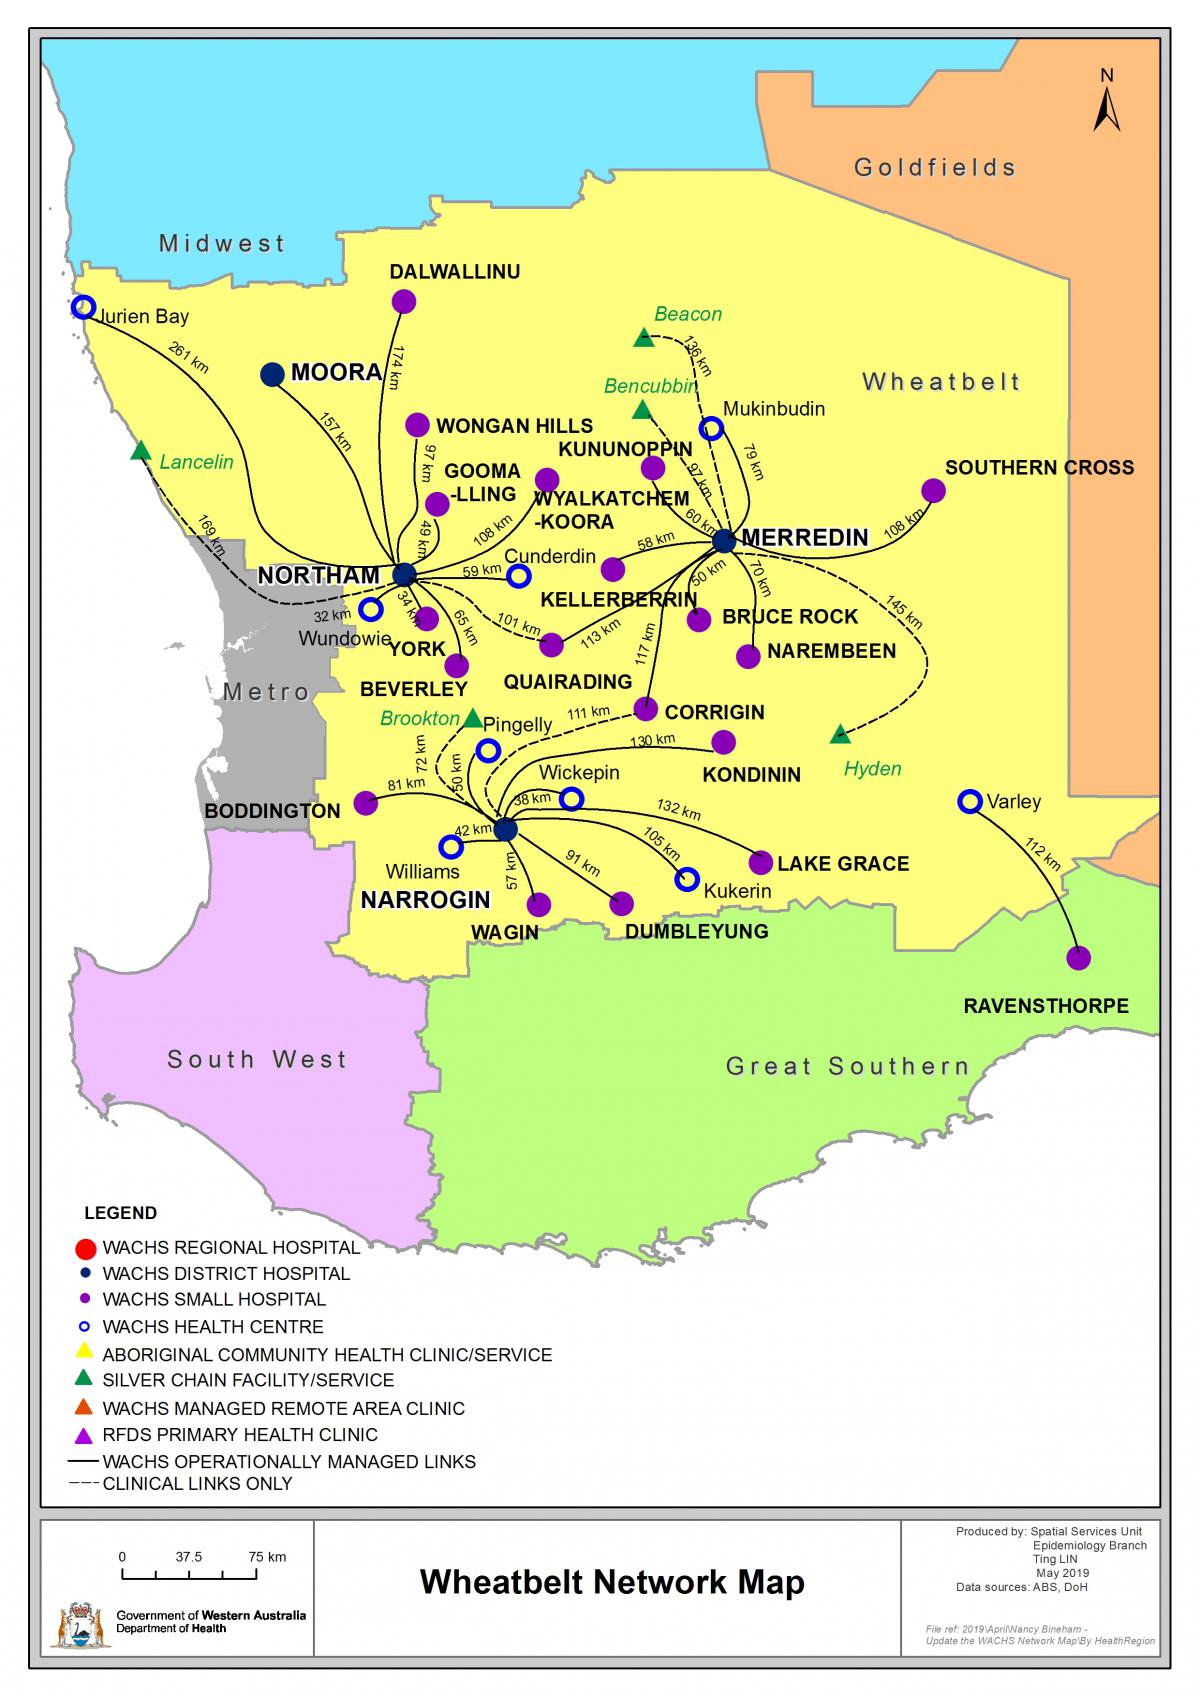 Wheatbelt Network Map